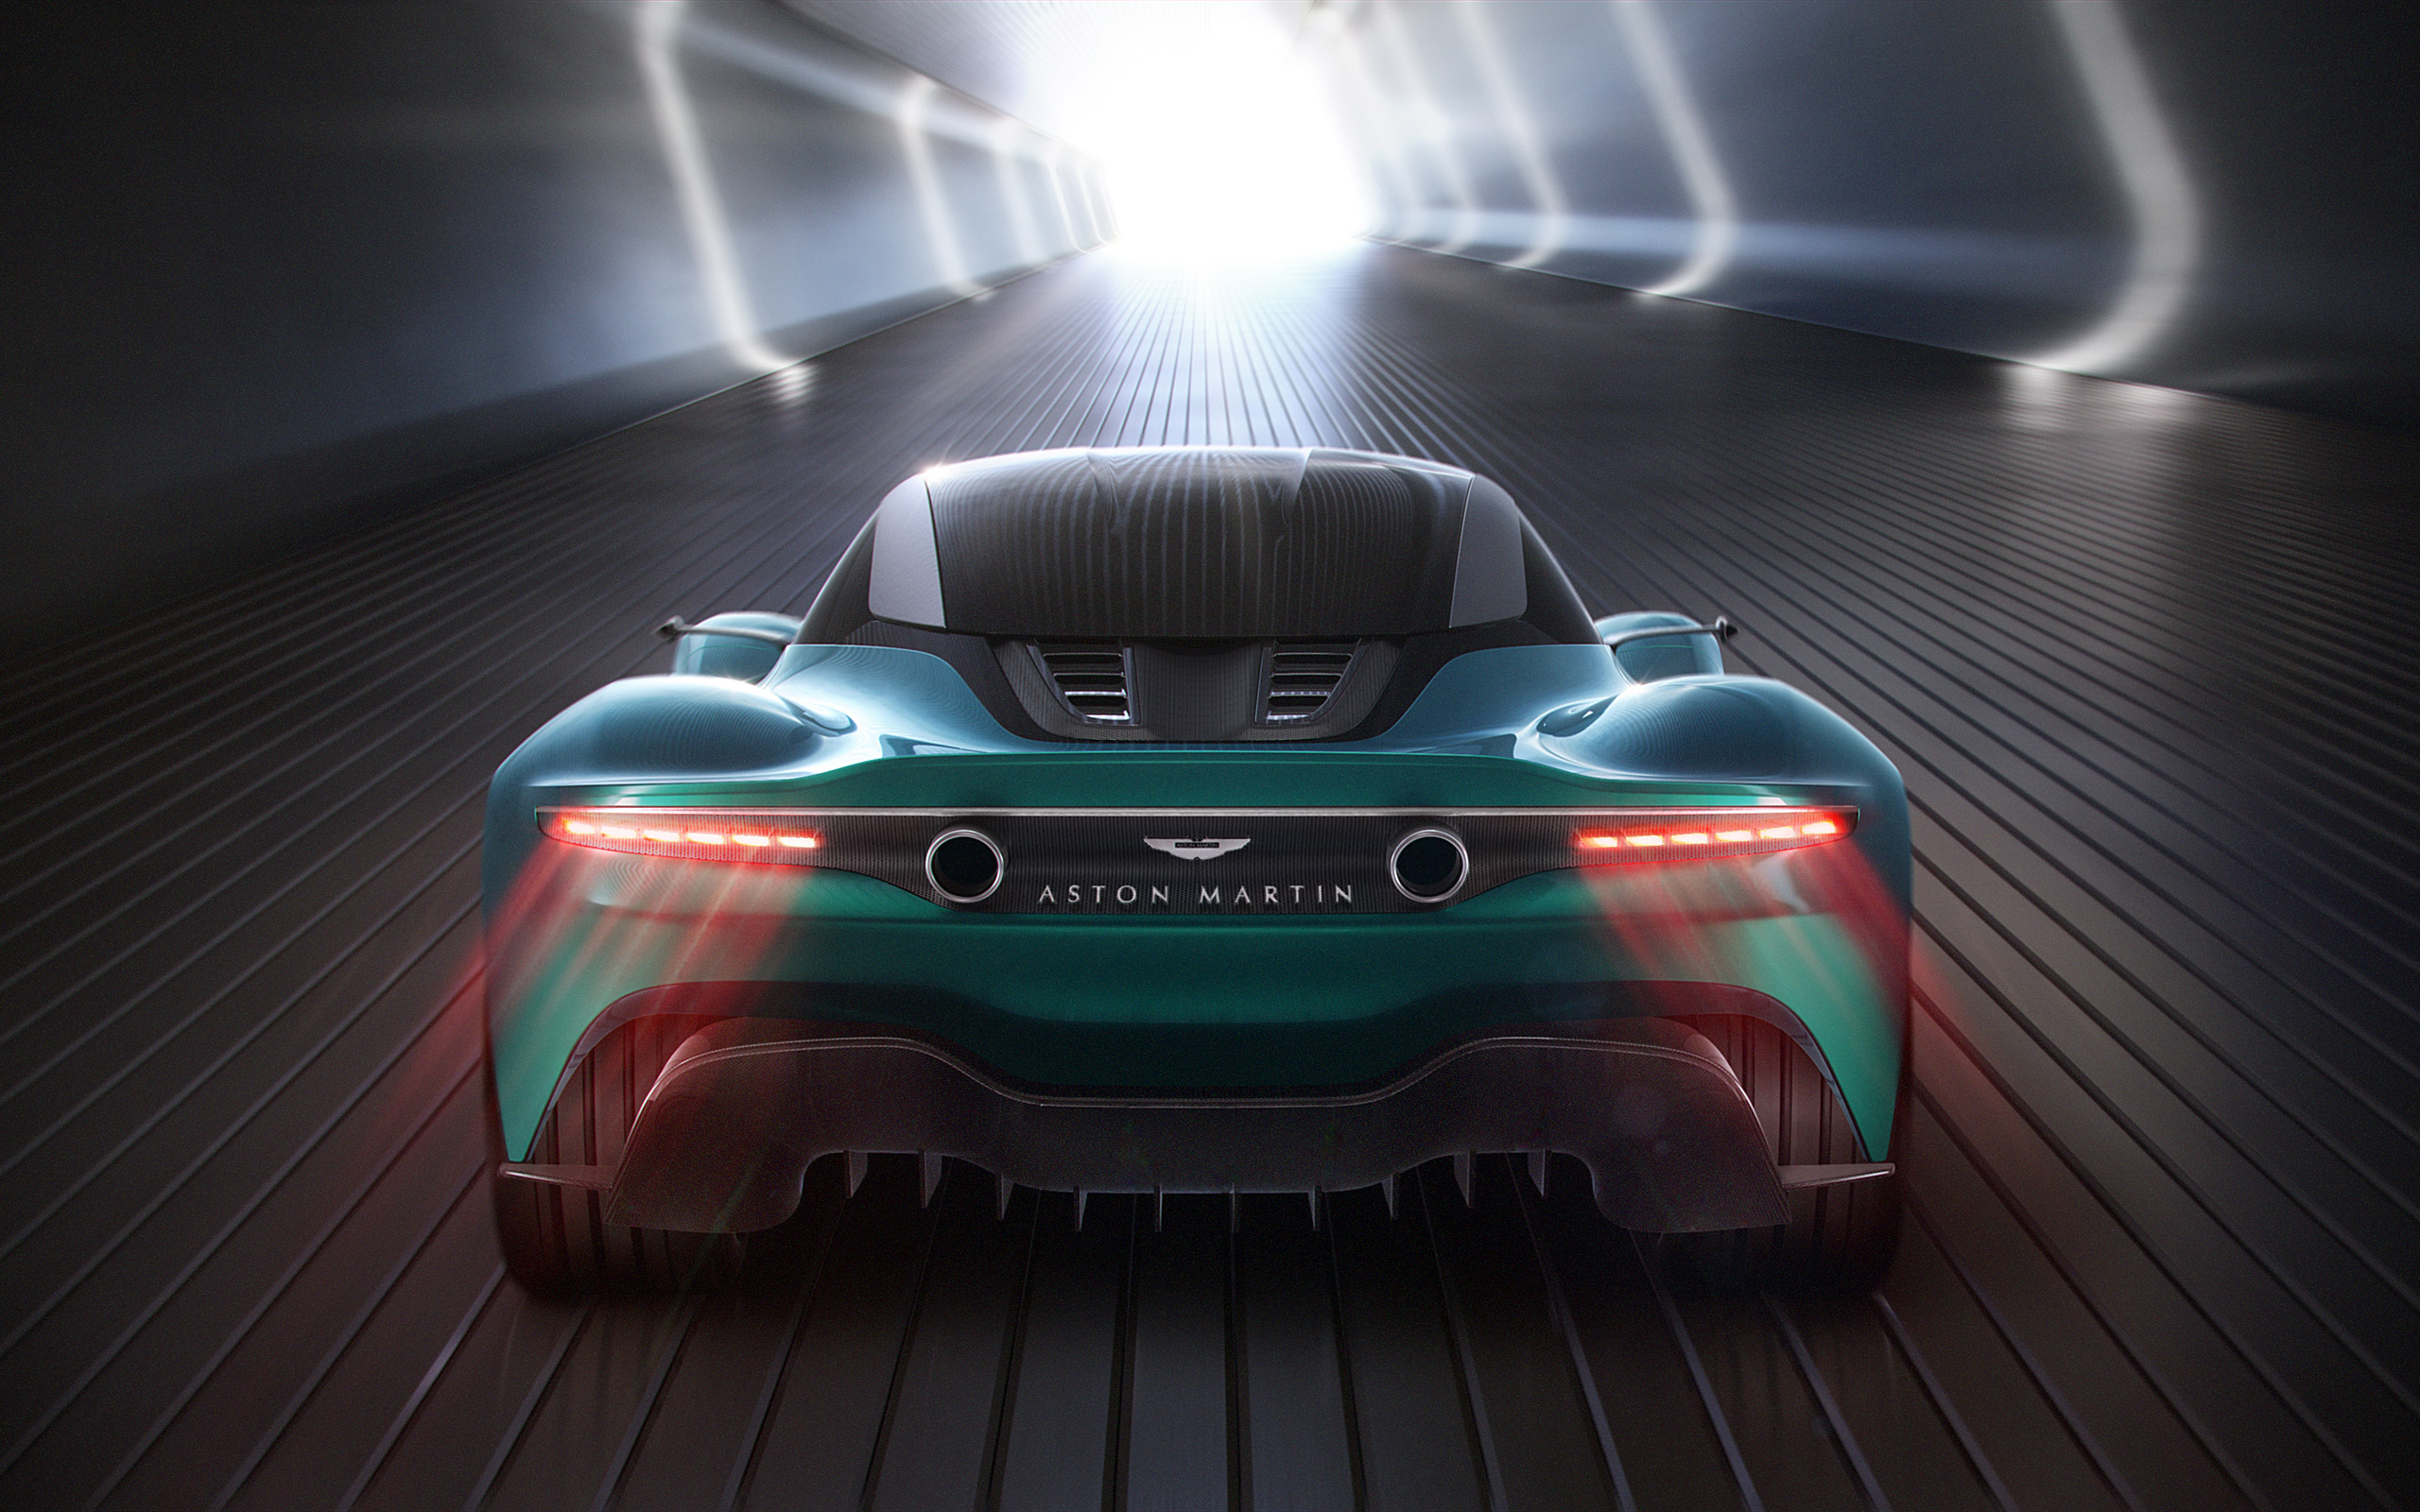  2019 Aston Martin Vanquish Vision Concept Wallpaper.